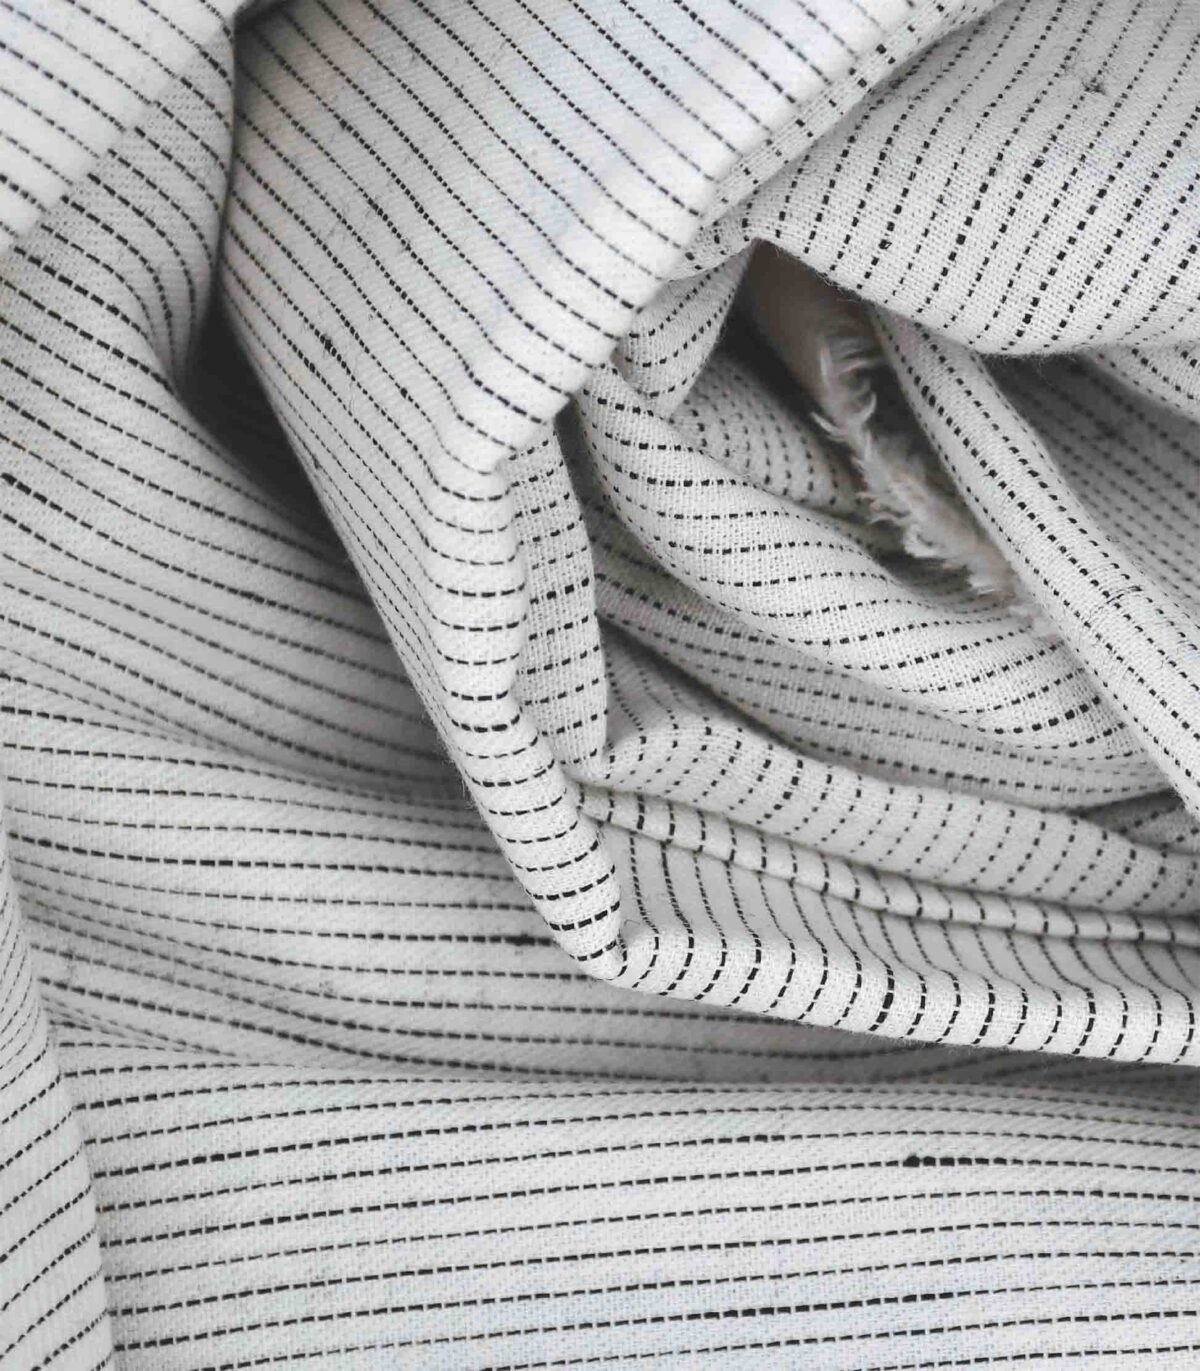 Black & White Yarn Dyed Stripe Fabric